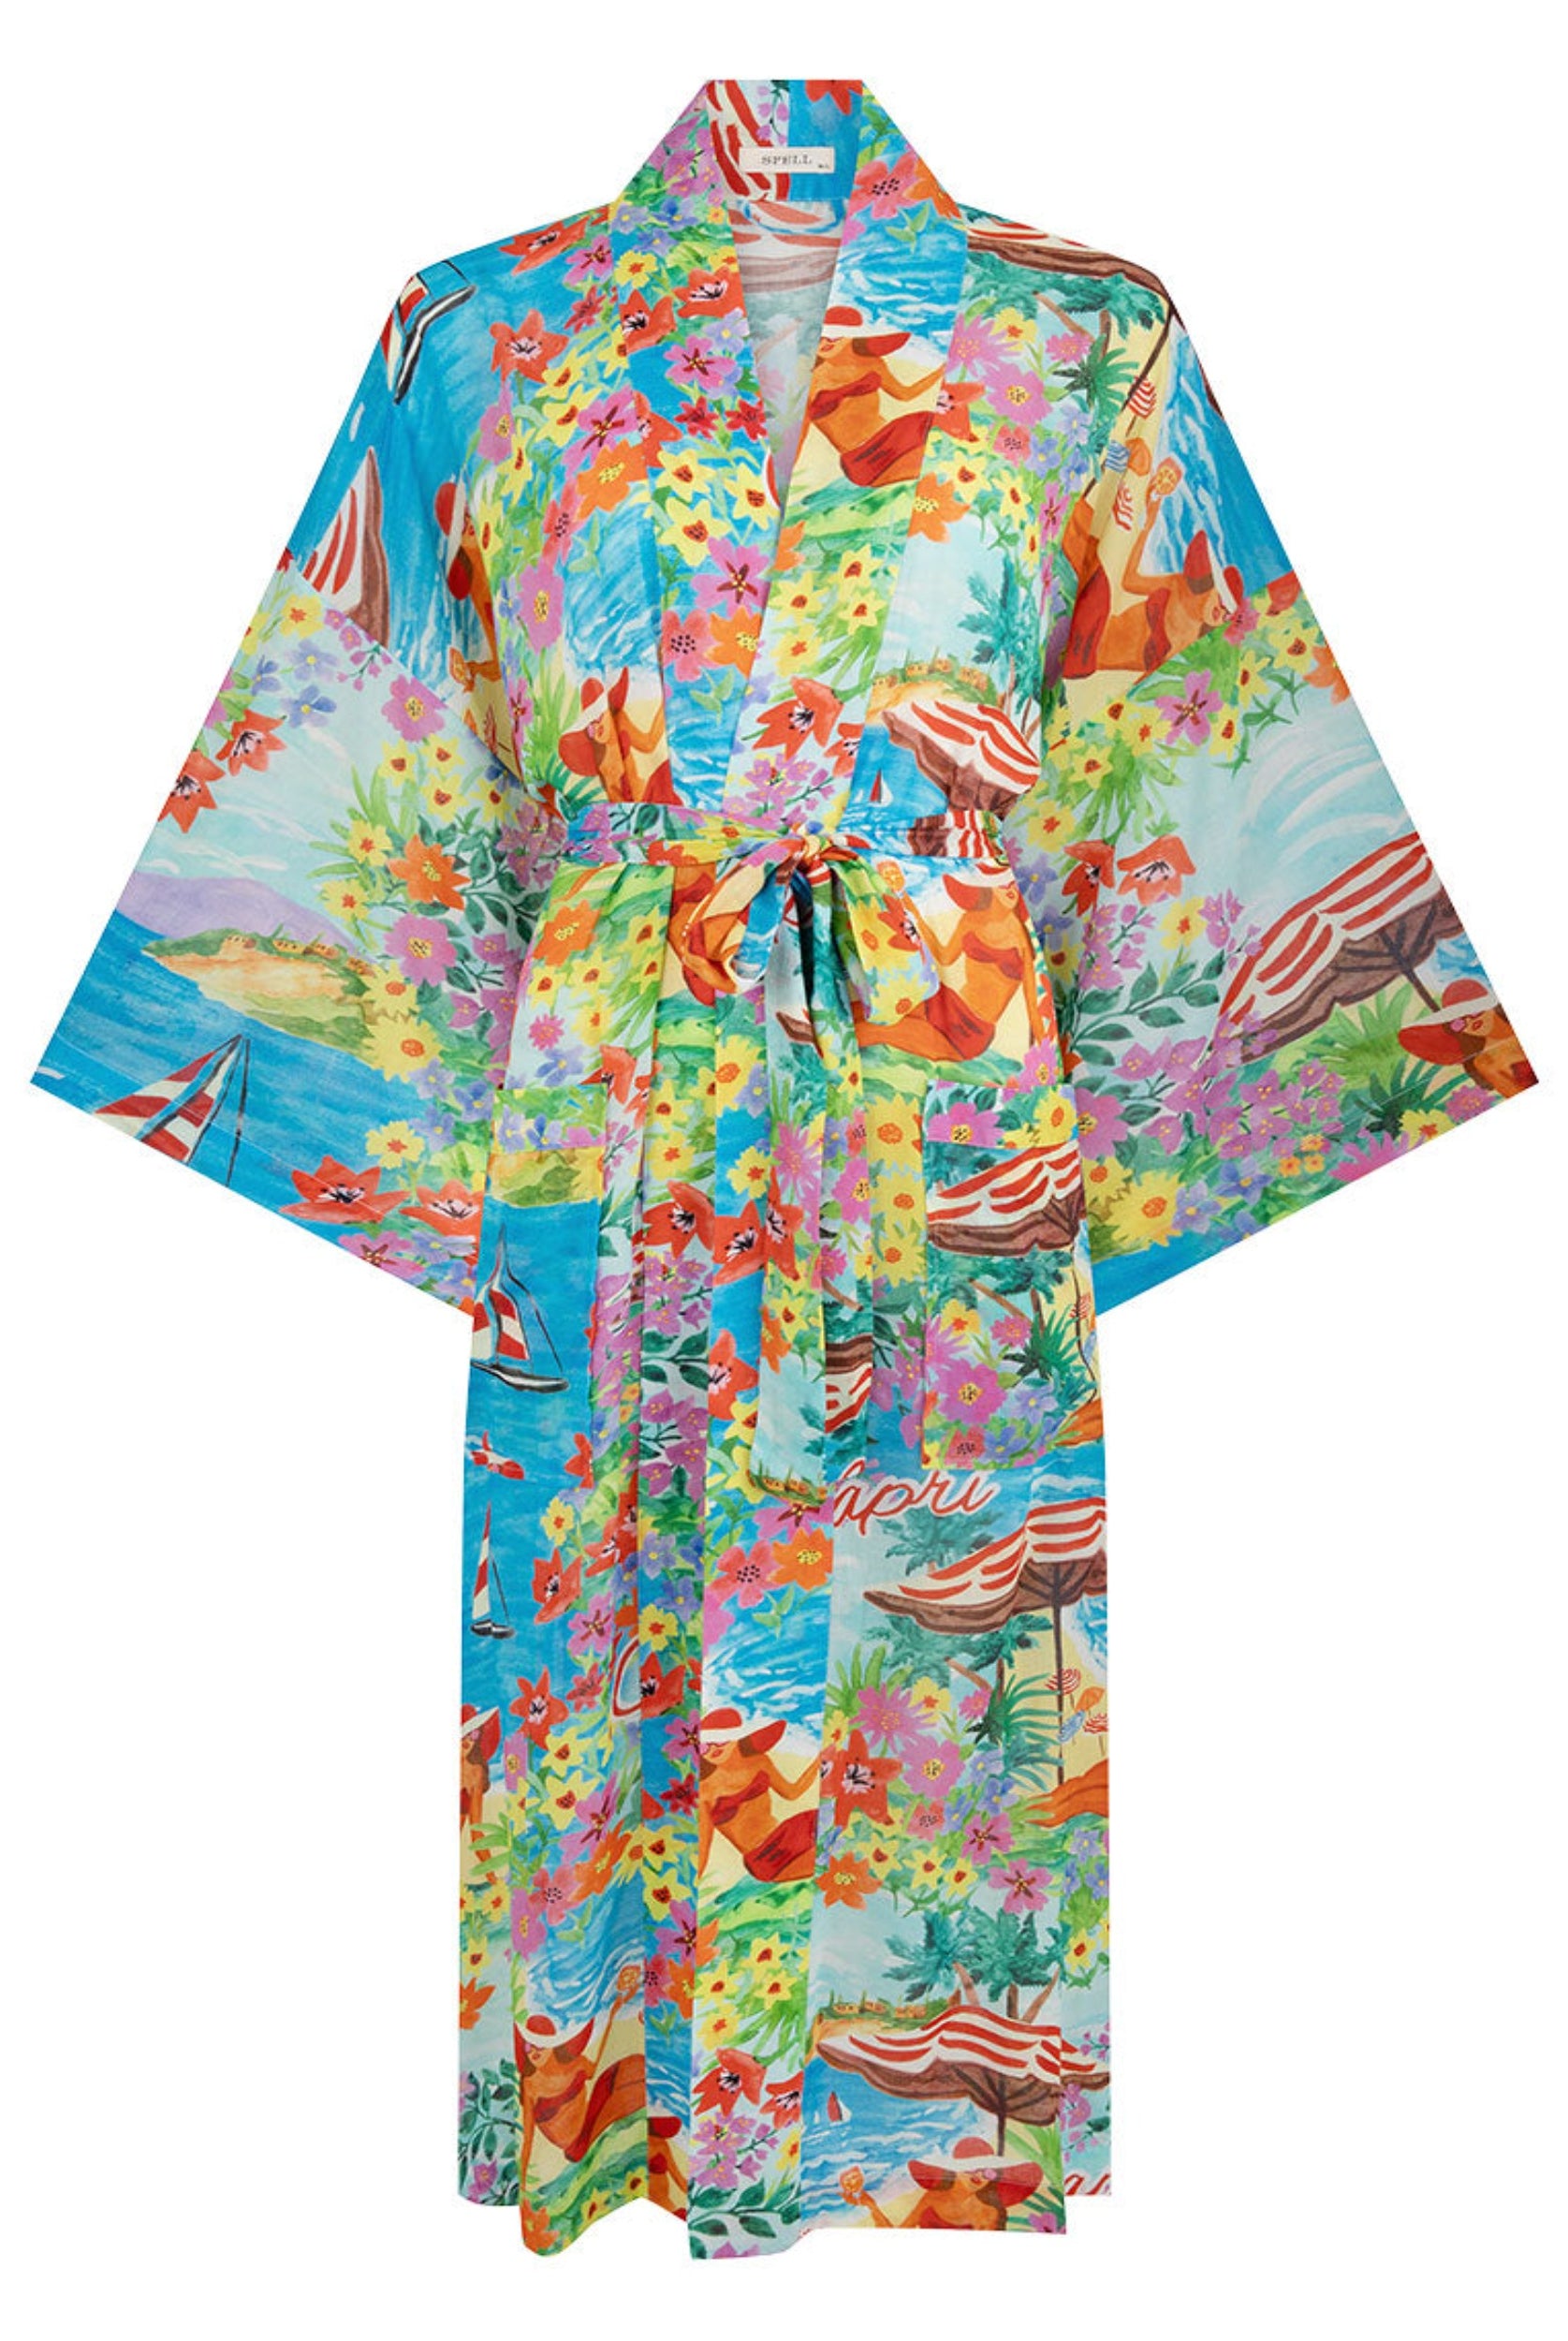 Capri Gown in Ocean Print from Spell